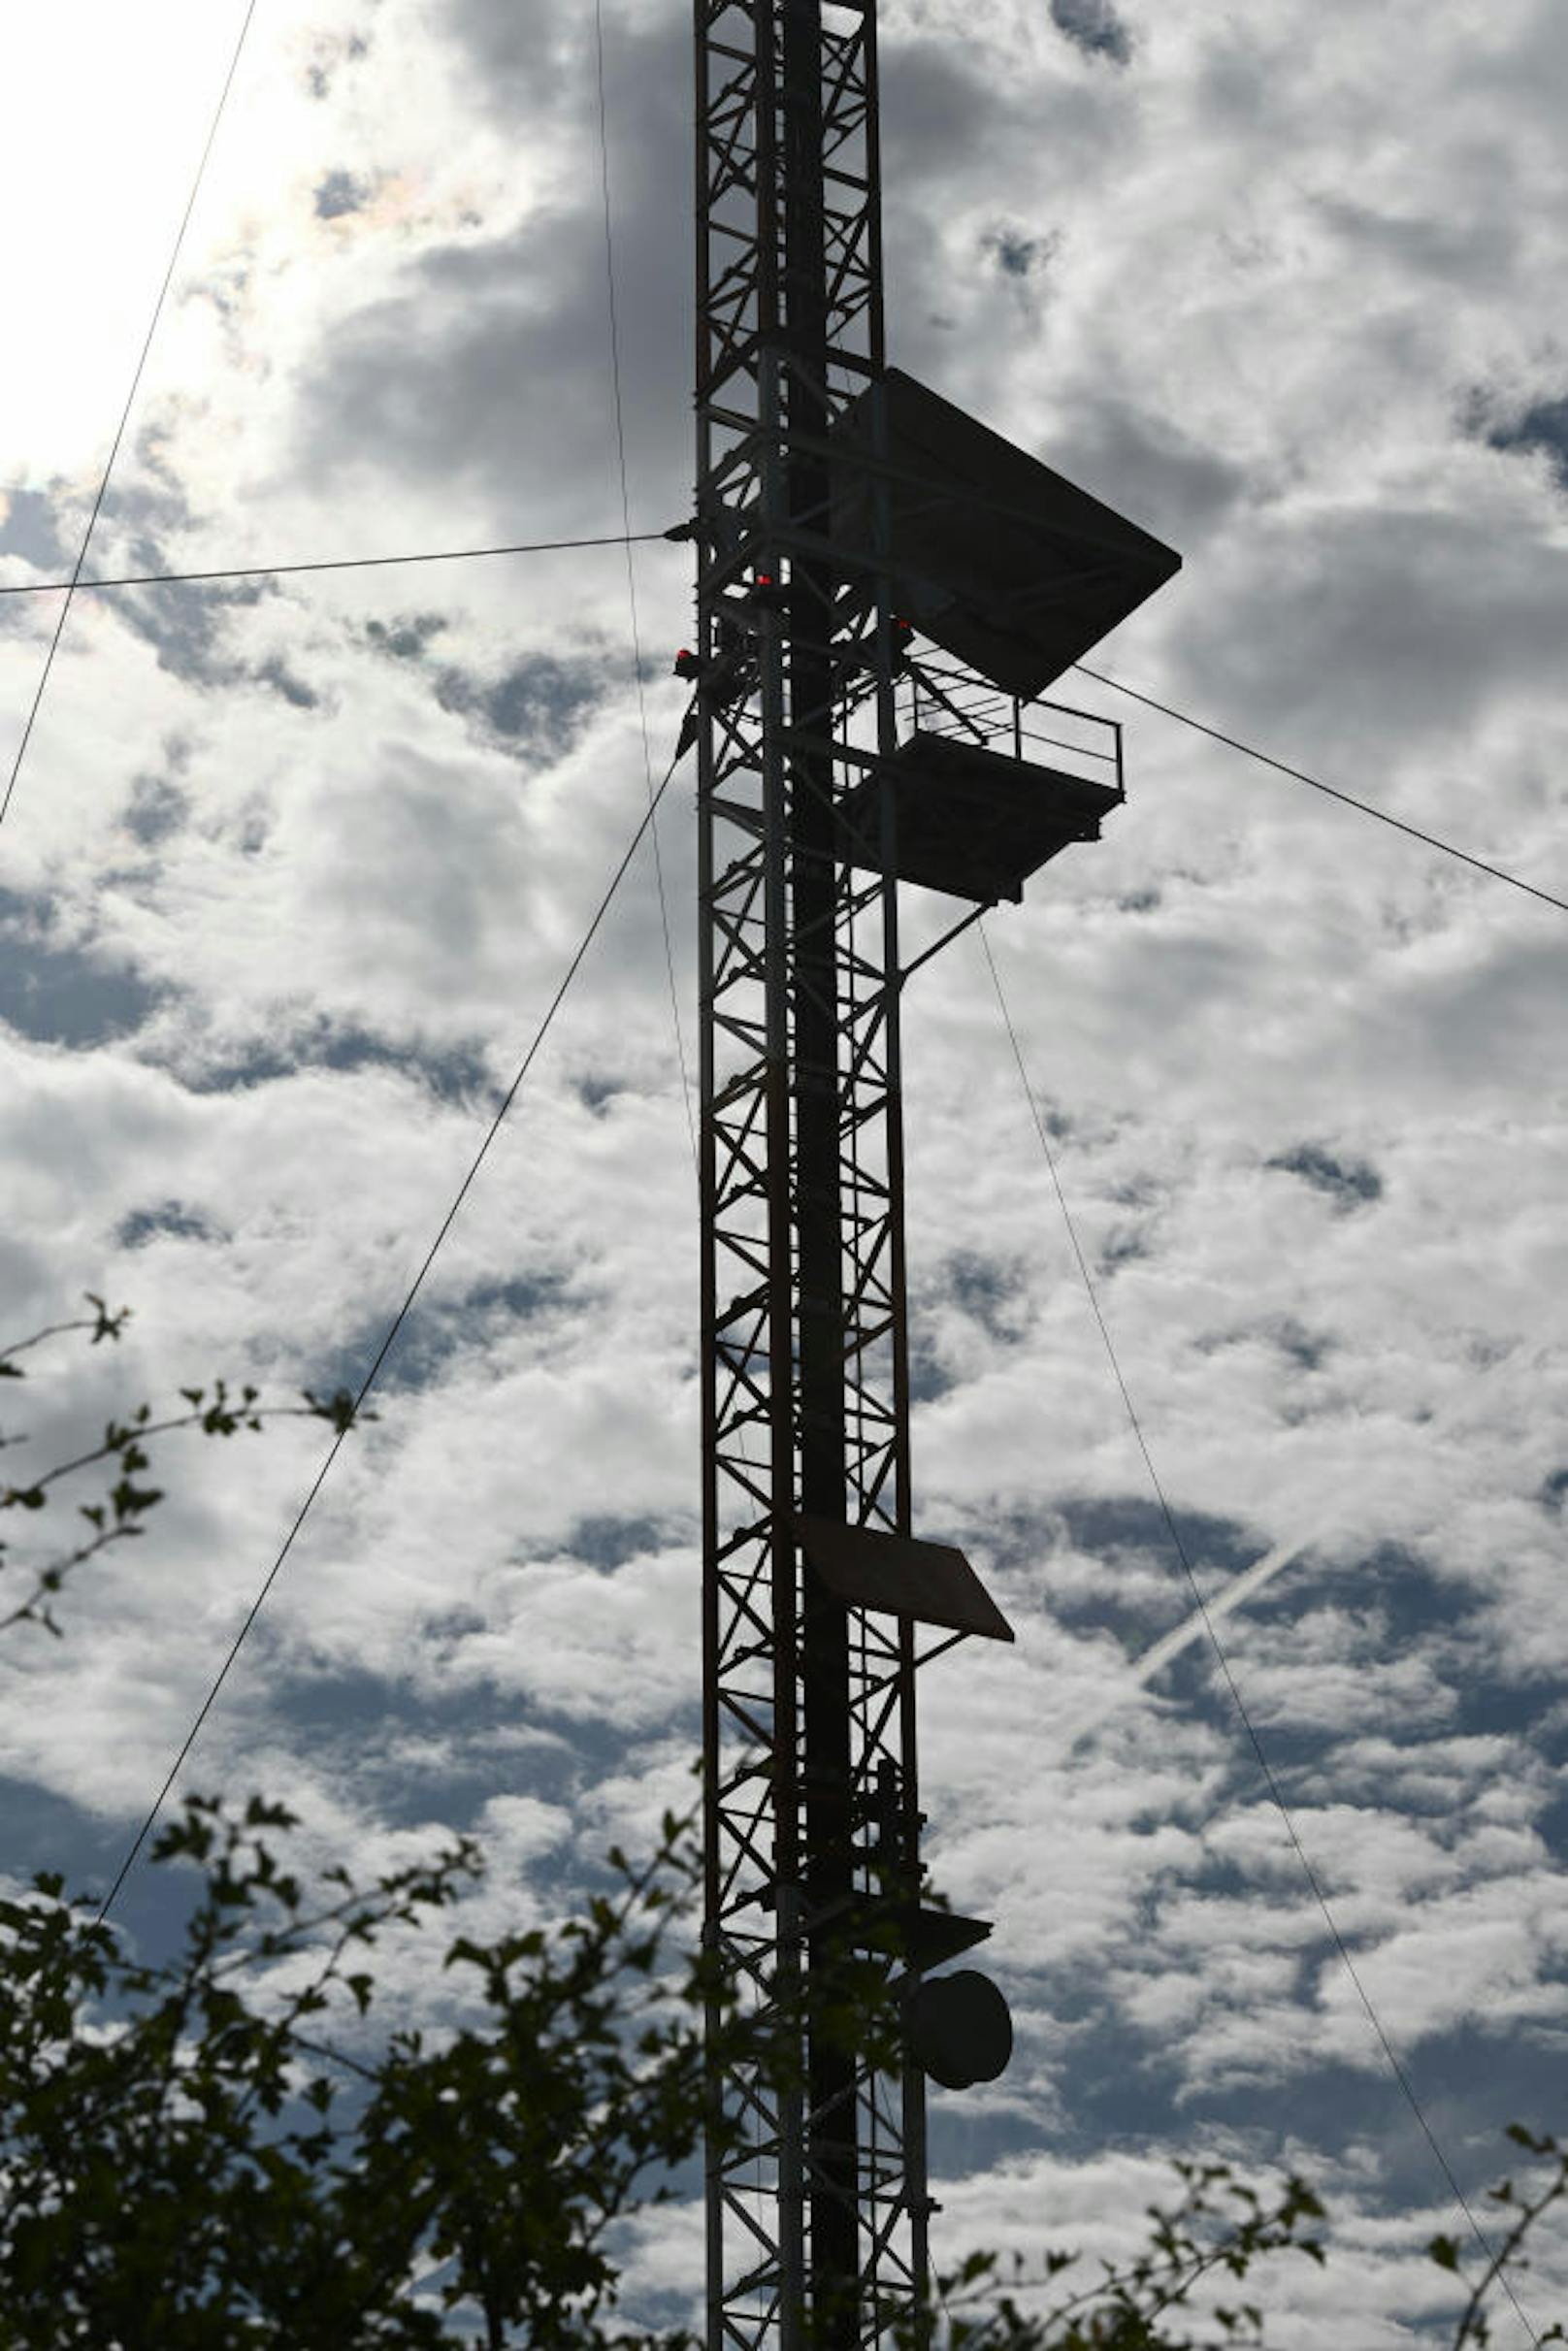 Laut "Bild" passierte der Unfall gegen 9.20 Uhr an dem Sendeturm "Sender Hoher Meißner".